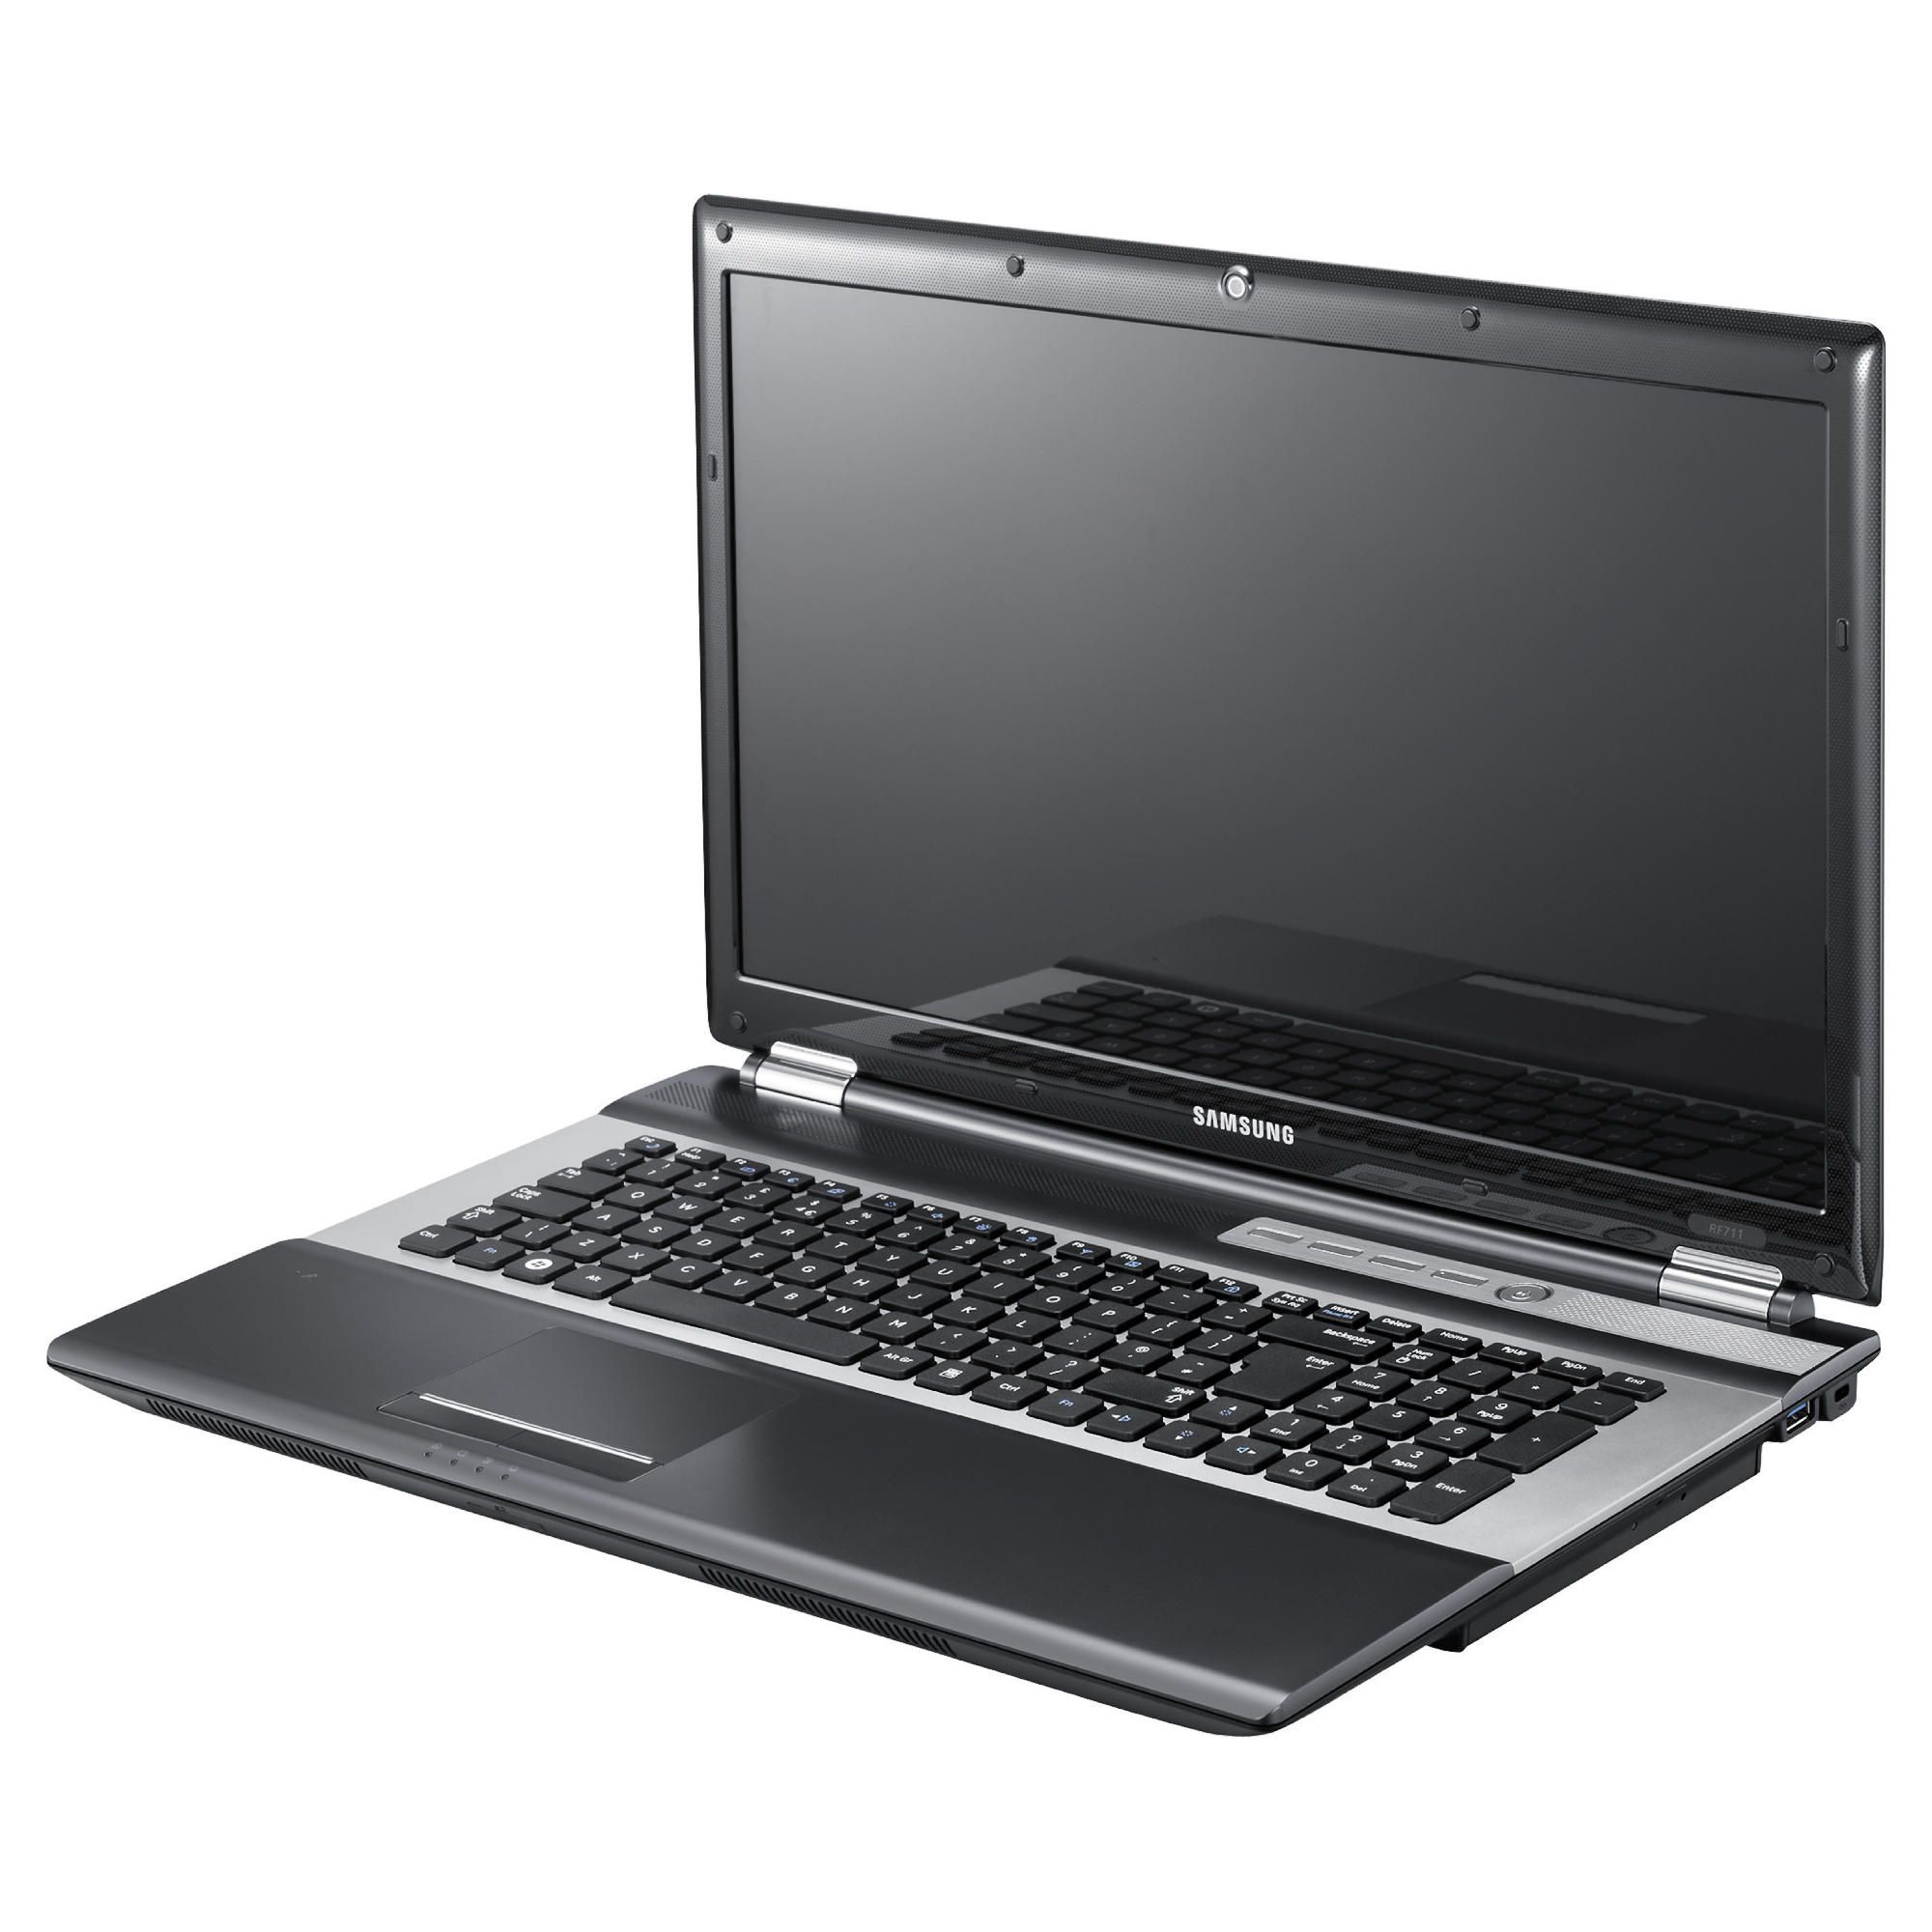 Samsung NP RF711 S07UK Laptop (Intel Core i7, 8Gb, 1Tb 17.3'' Display) Black at Tesco Direct